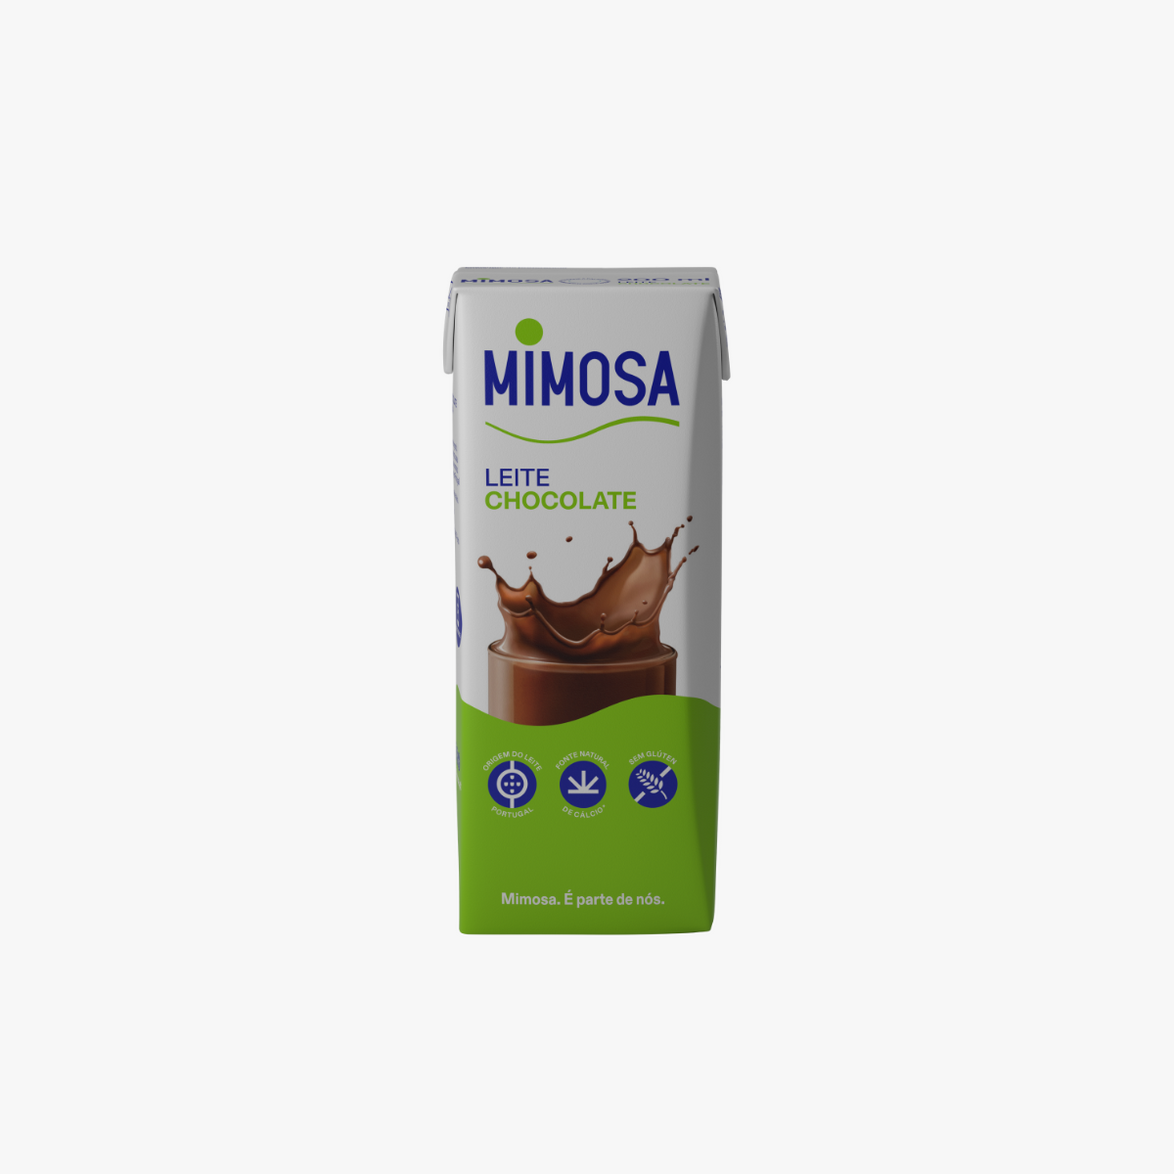  Leite Meio-Gordo com Chocolate Mimosa